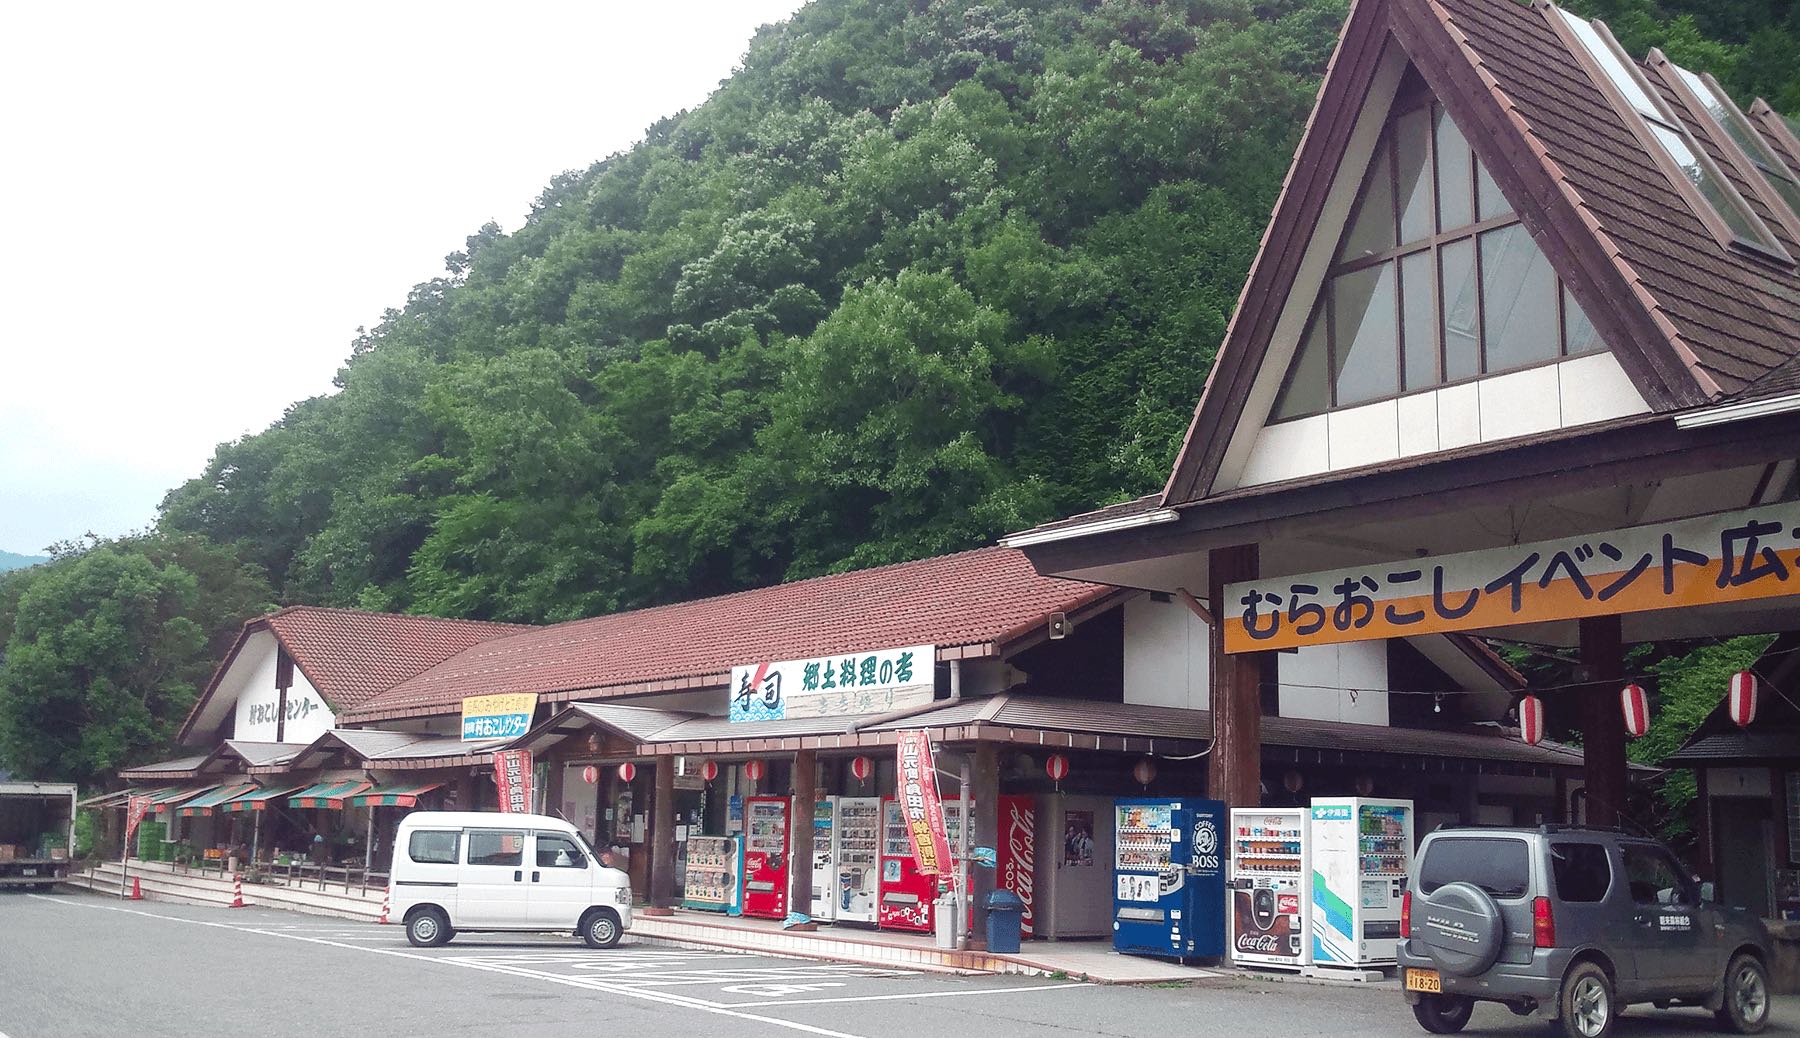 Roadside Station "The Village Center" (Muraokoshi Center)